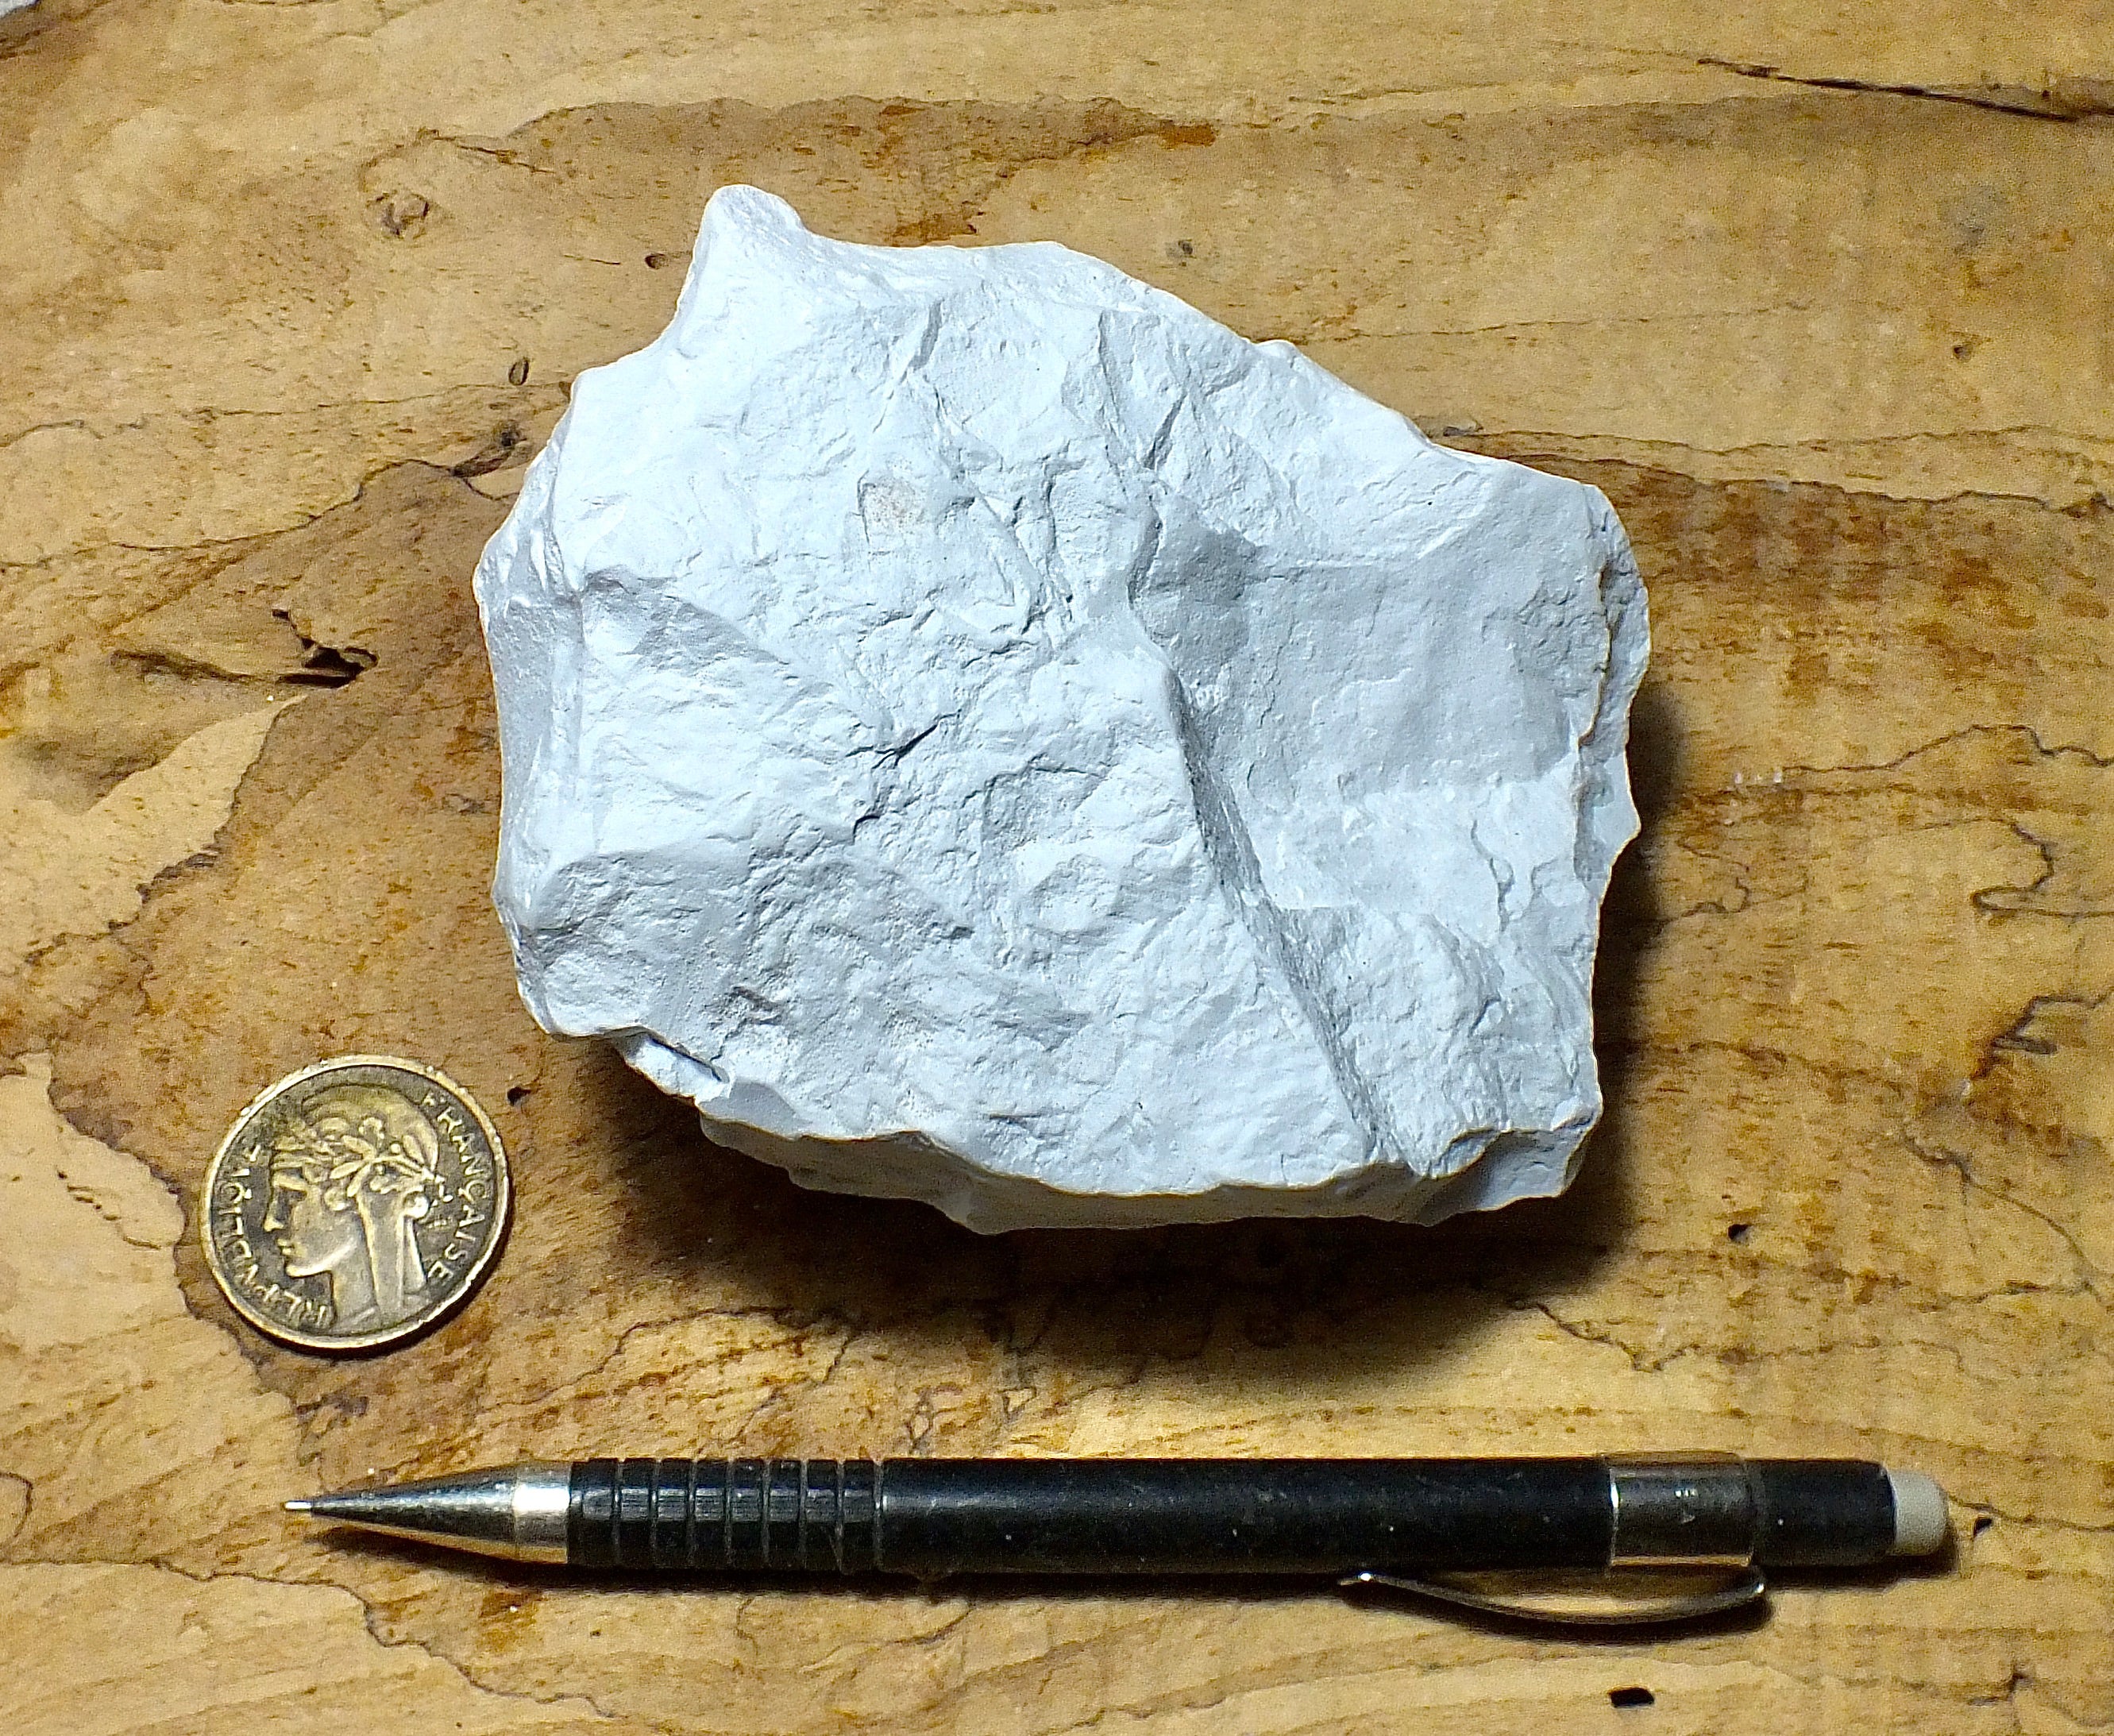 kaolinite - soft white kaolin - display specimen of the primary